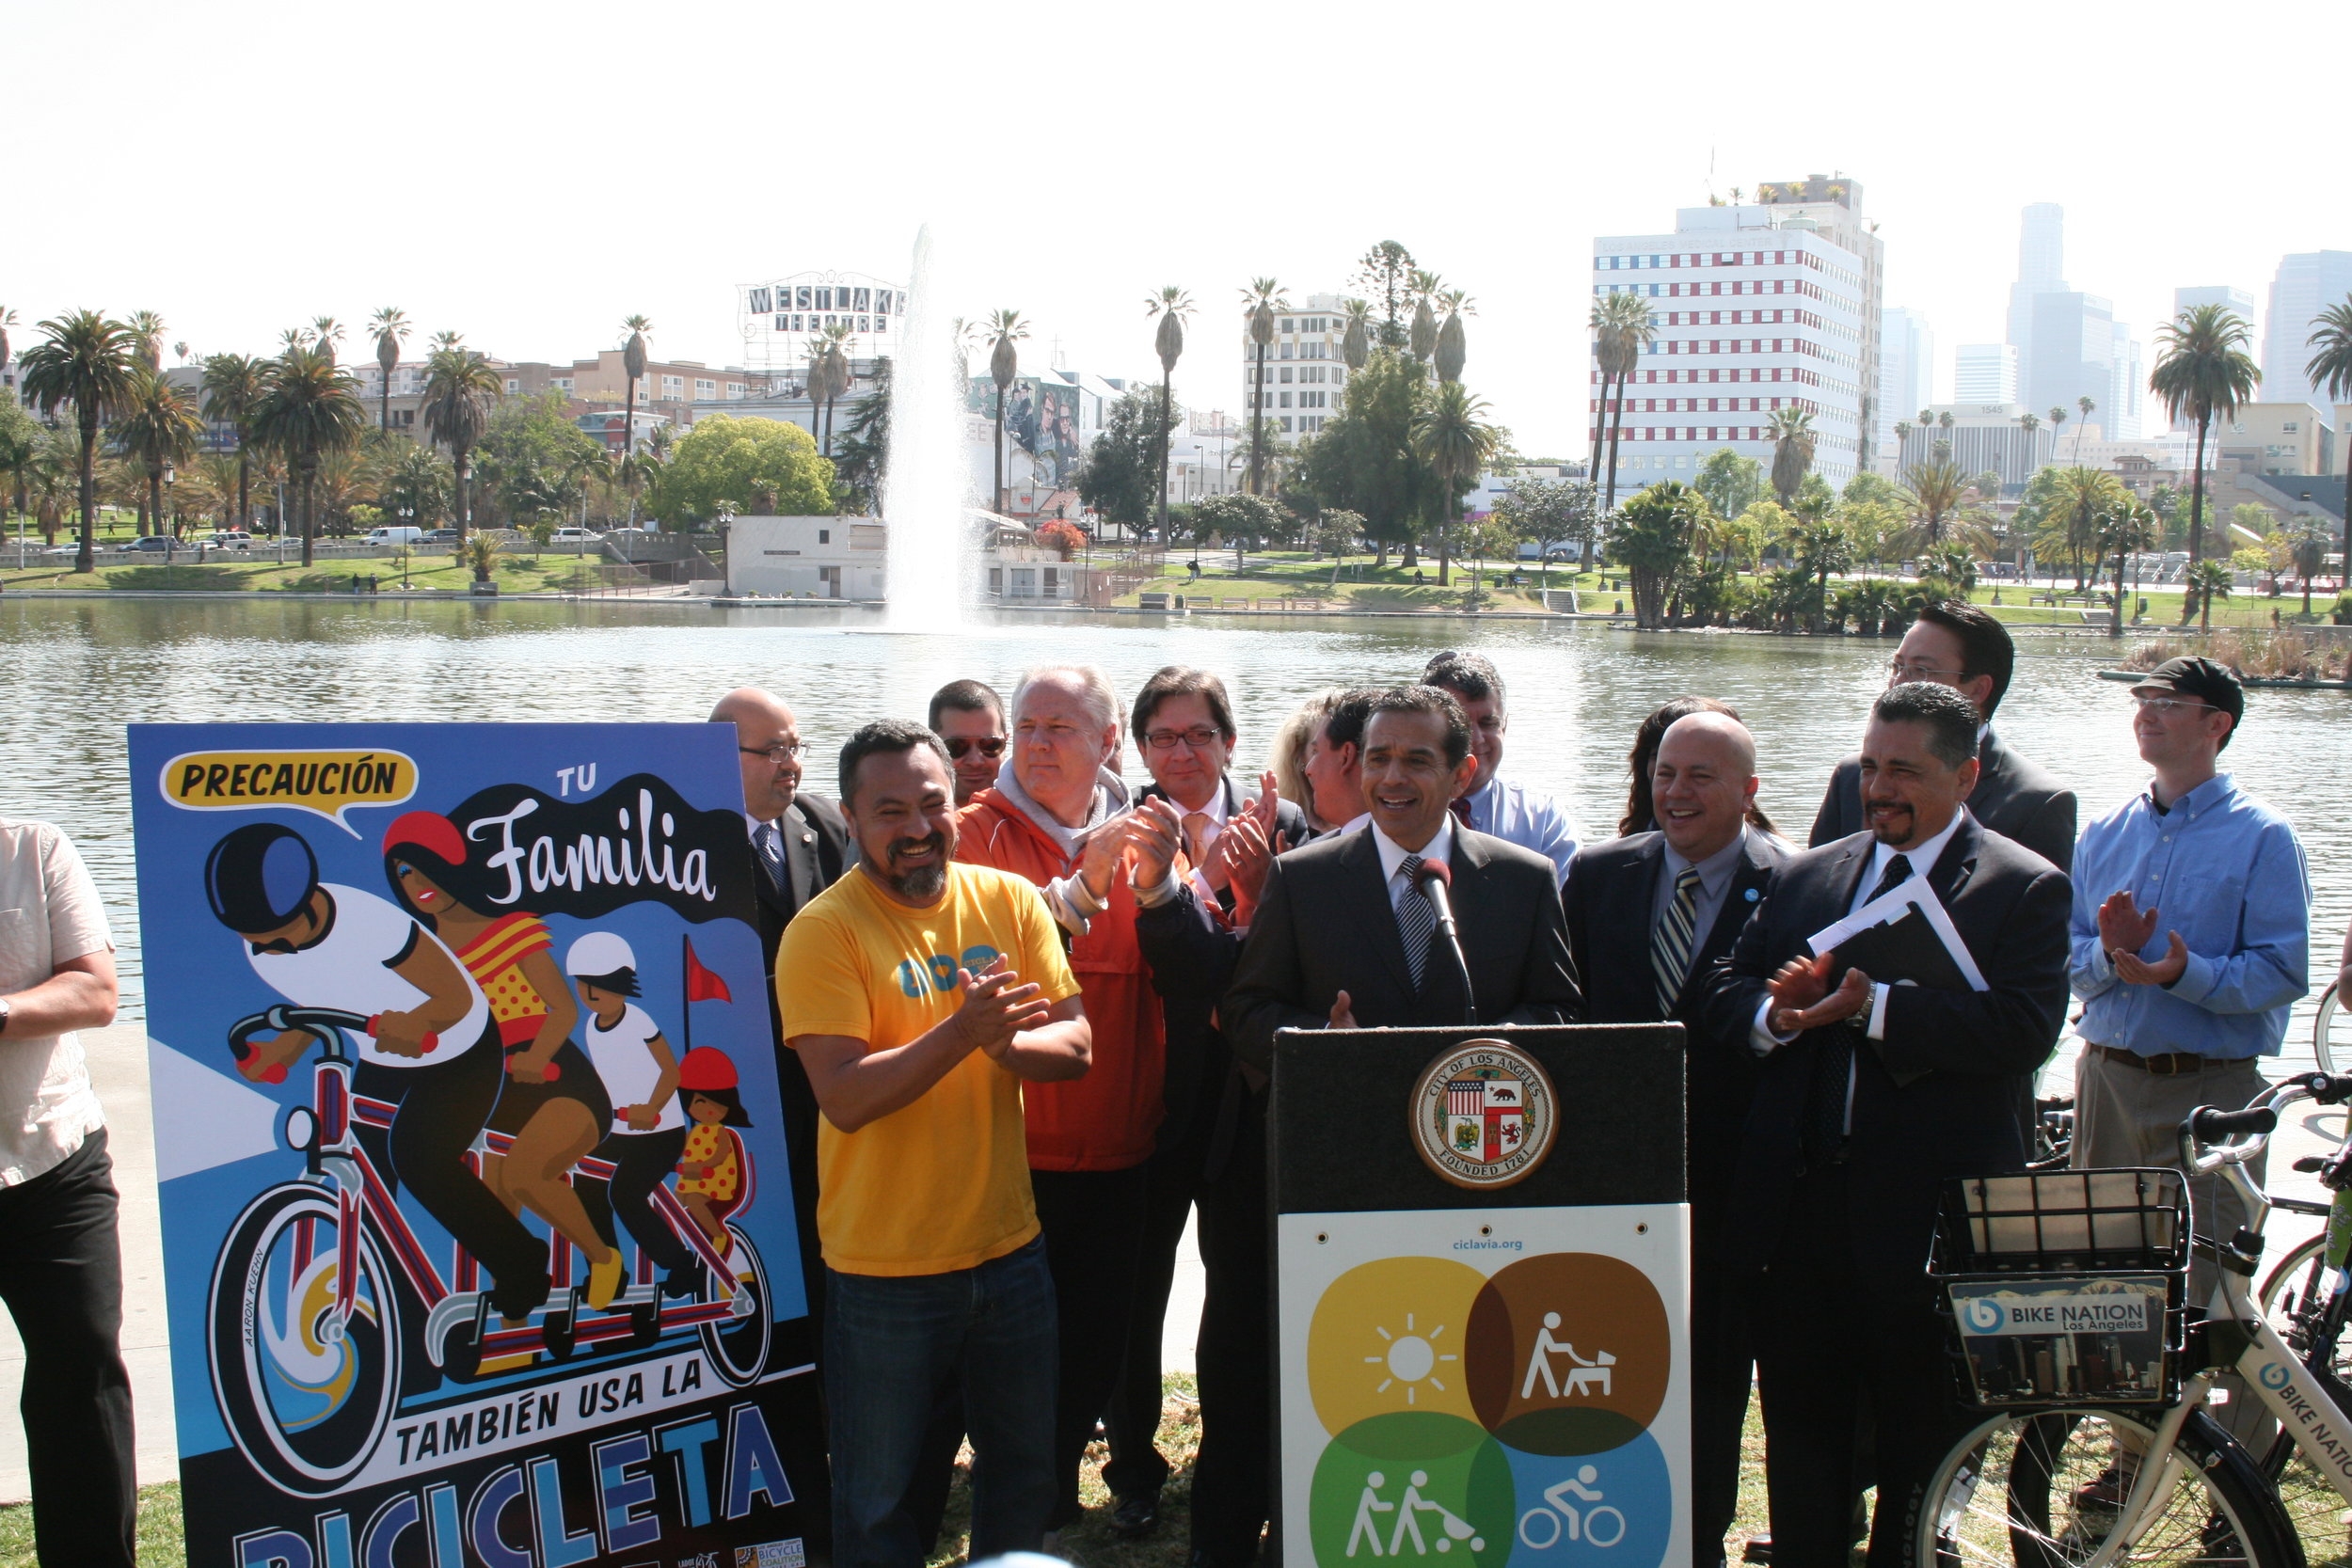 Mayor Villaraigosa presents PSA at a press conference on 4.5.2012